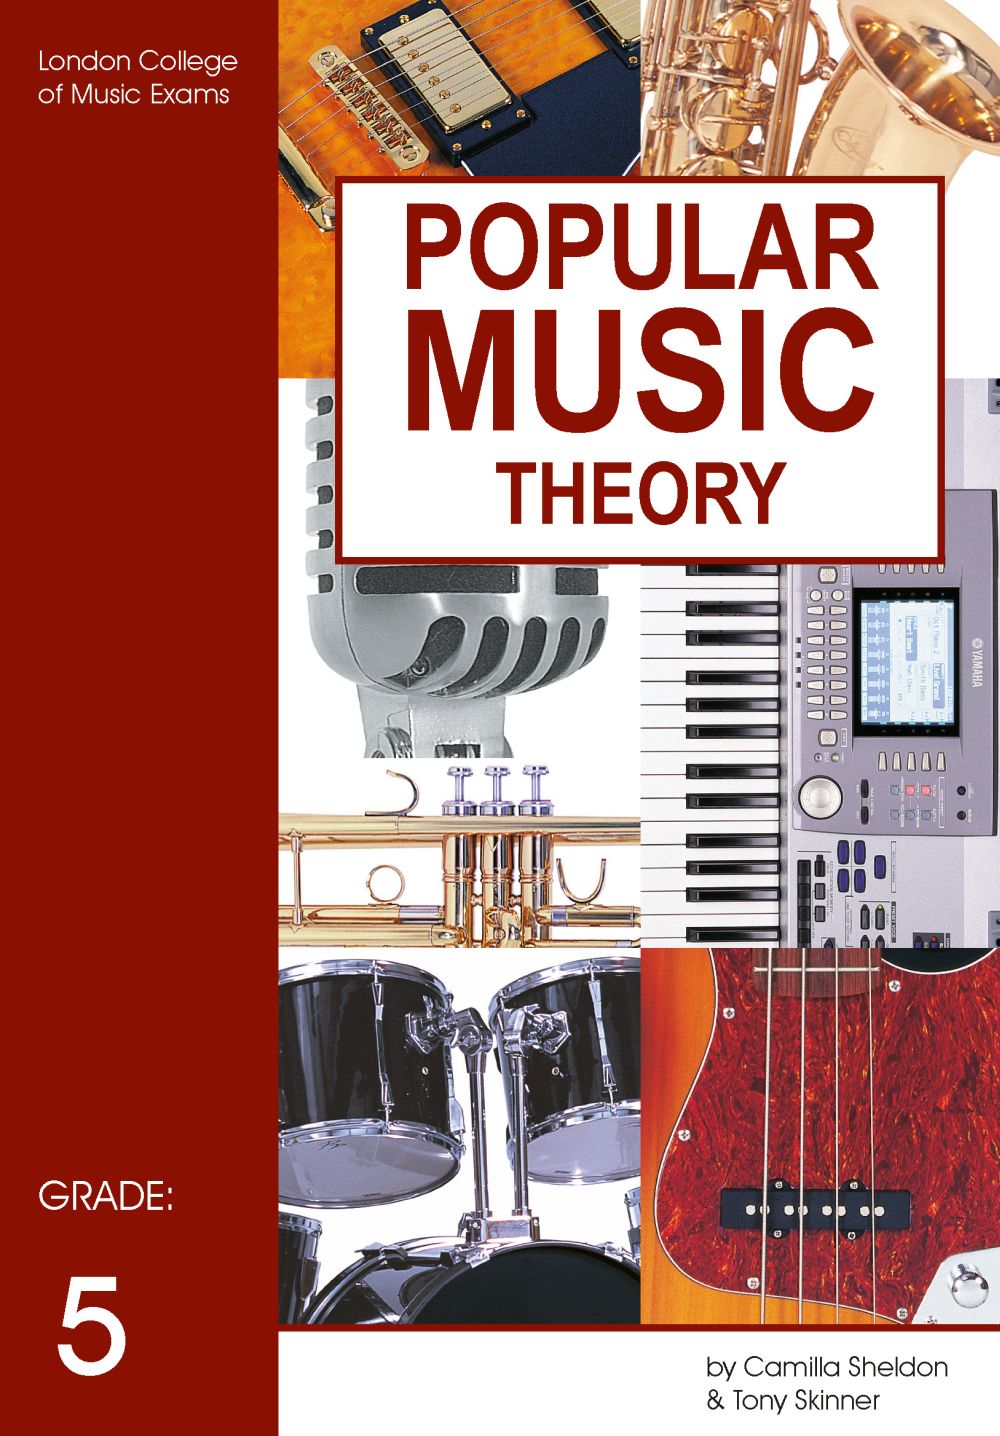 Lcm Popular Music Theory Grade 5 Sheldon Skinner: Theory